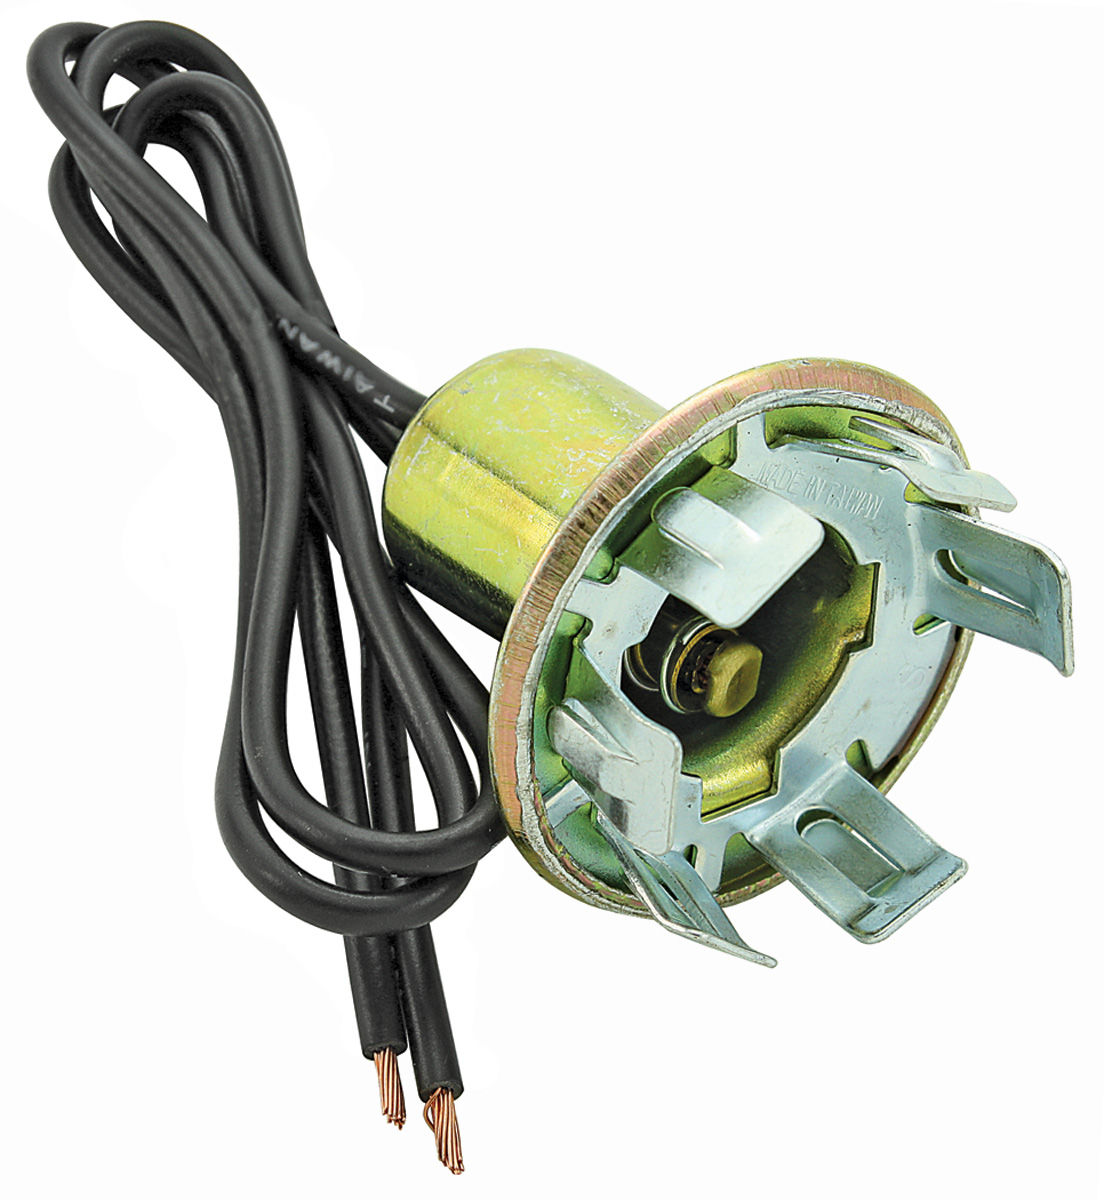 S 878 Standard Ignition Parking Light Bulb Socket,Tail Lamp Socket,Turn Signal